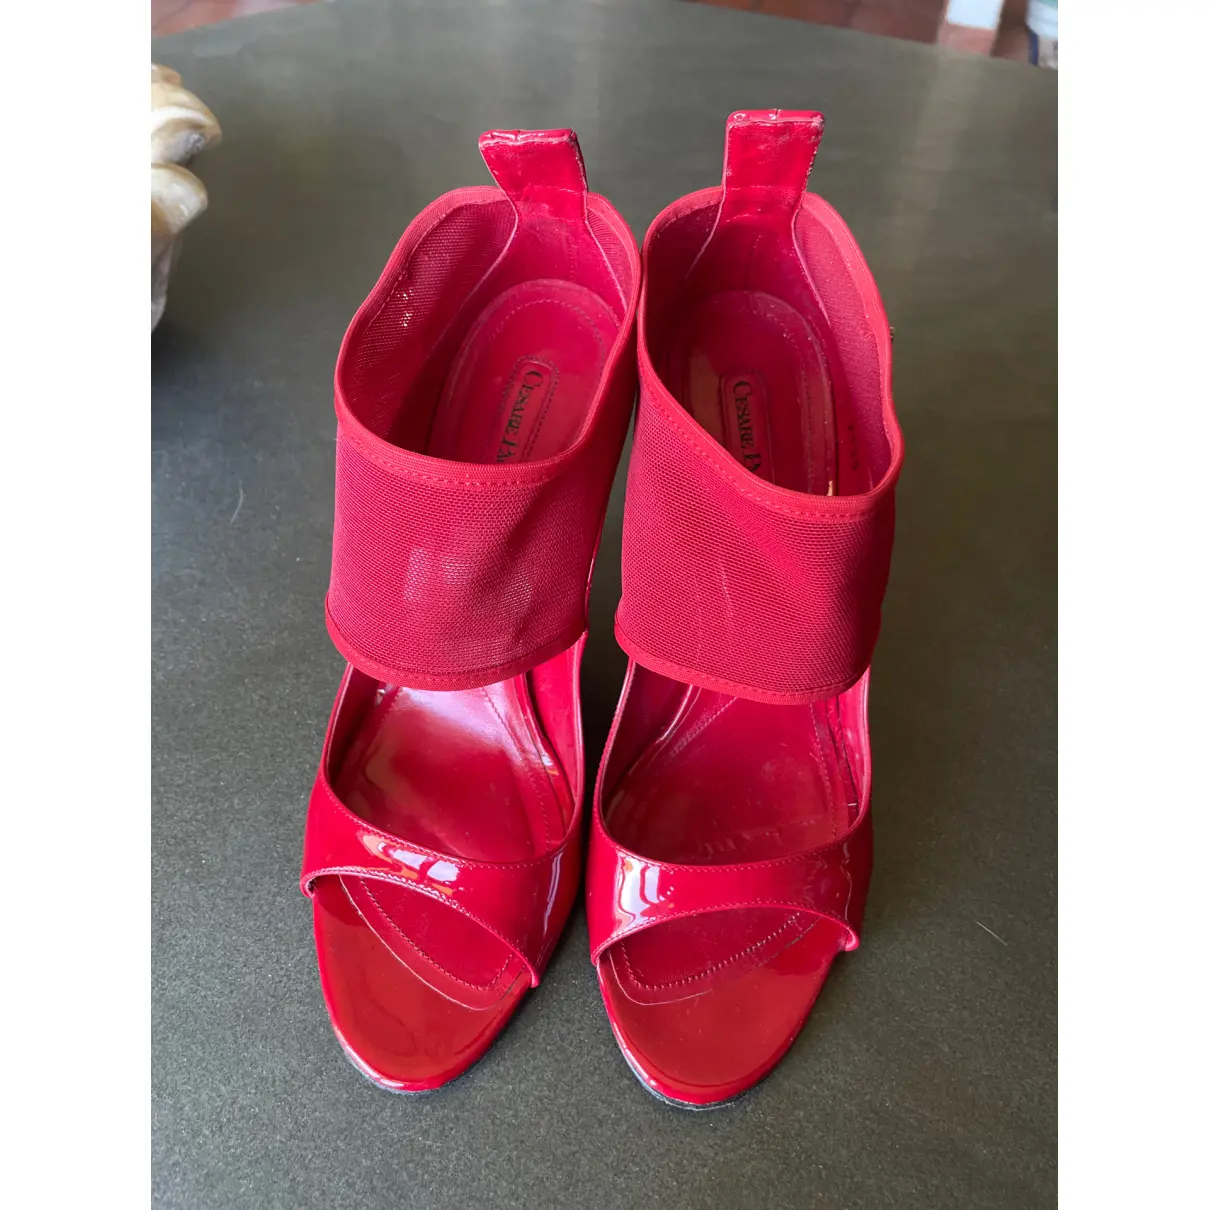 Buy Cesare Paciotti Patent leather sandals online